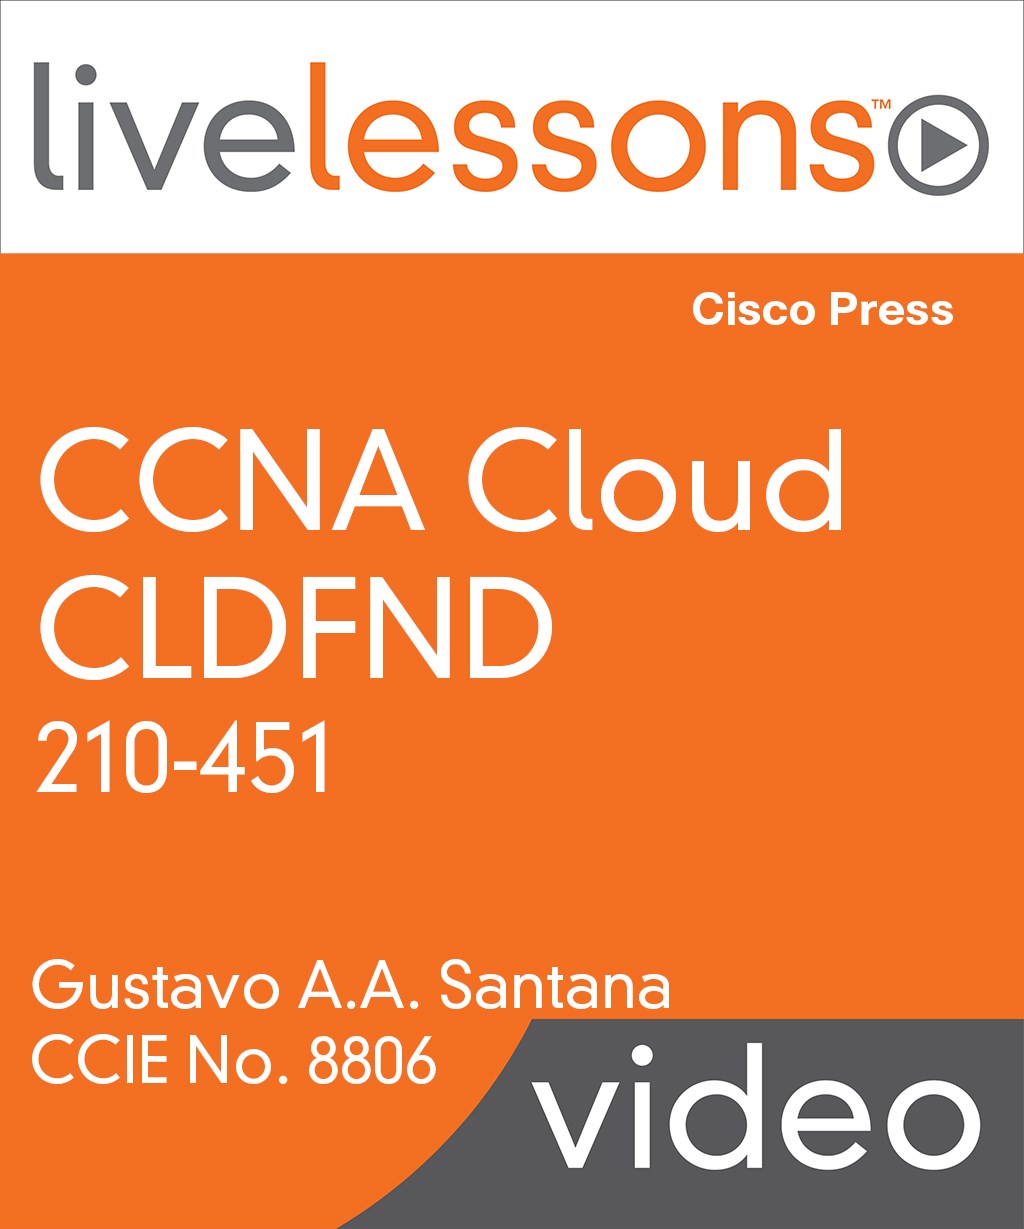 CCNA Cloud CLDFND 210-451 LiveLessons: Understanding Cisco Cloud Fundamentals